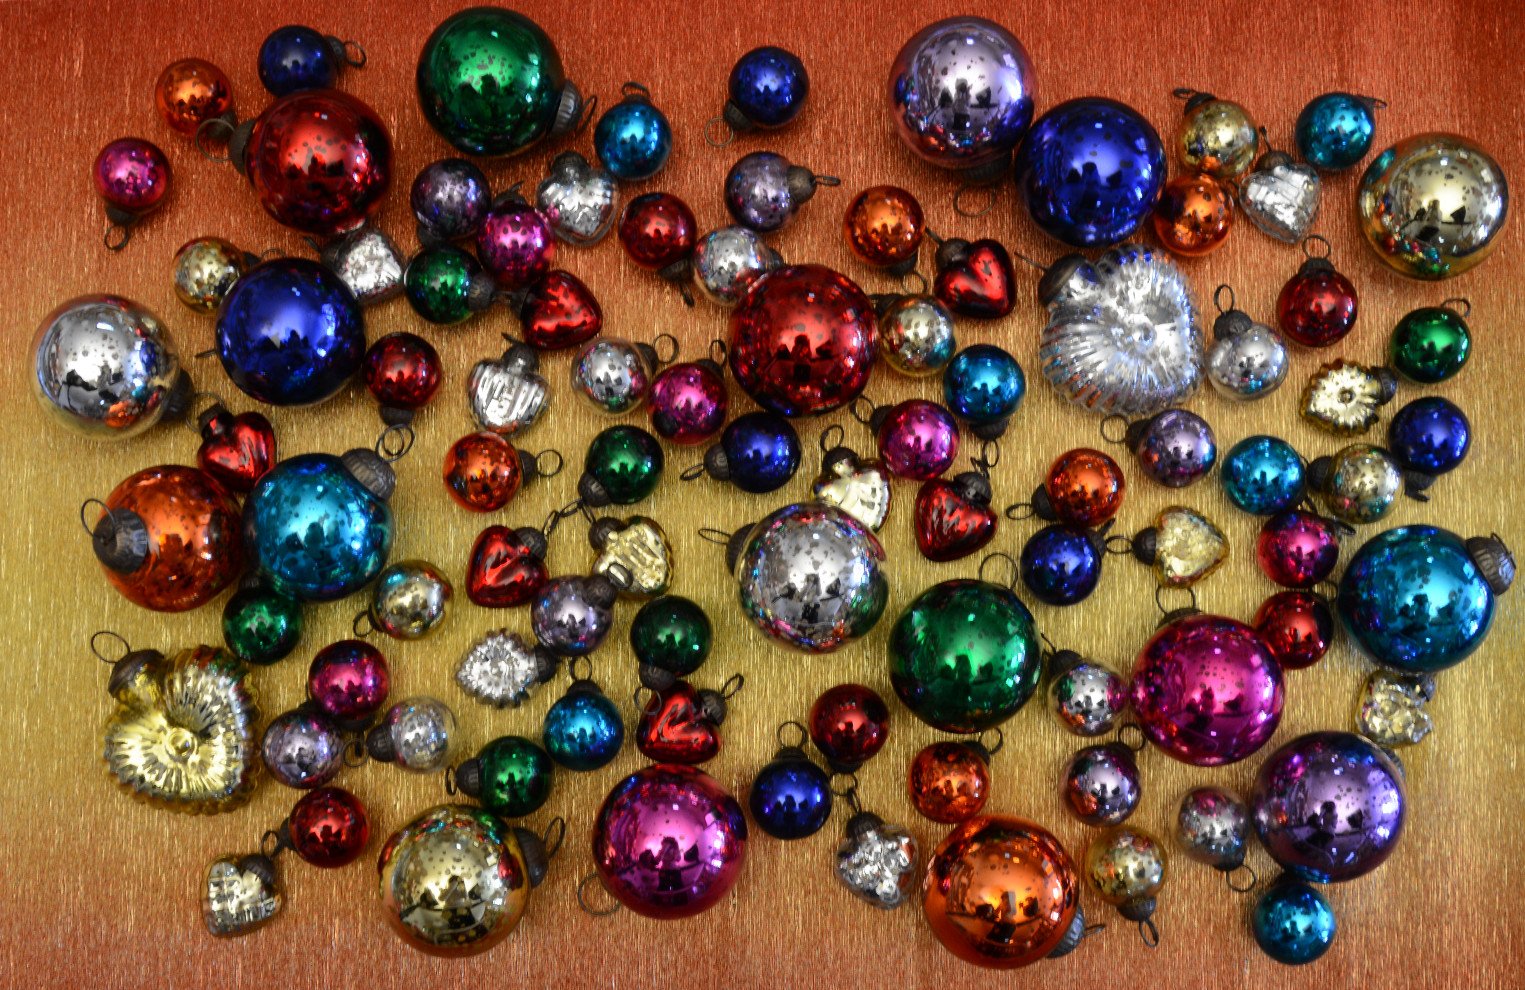 6 Pack | 1.5-Inch Orange Ava Mini Mercury Handcrafted Glass Balls Ornaments Christmas Tree Decoration